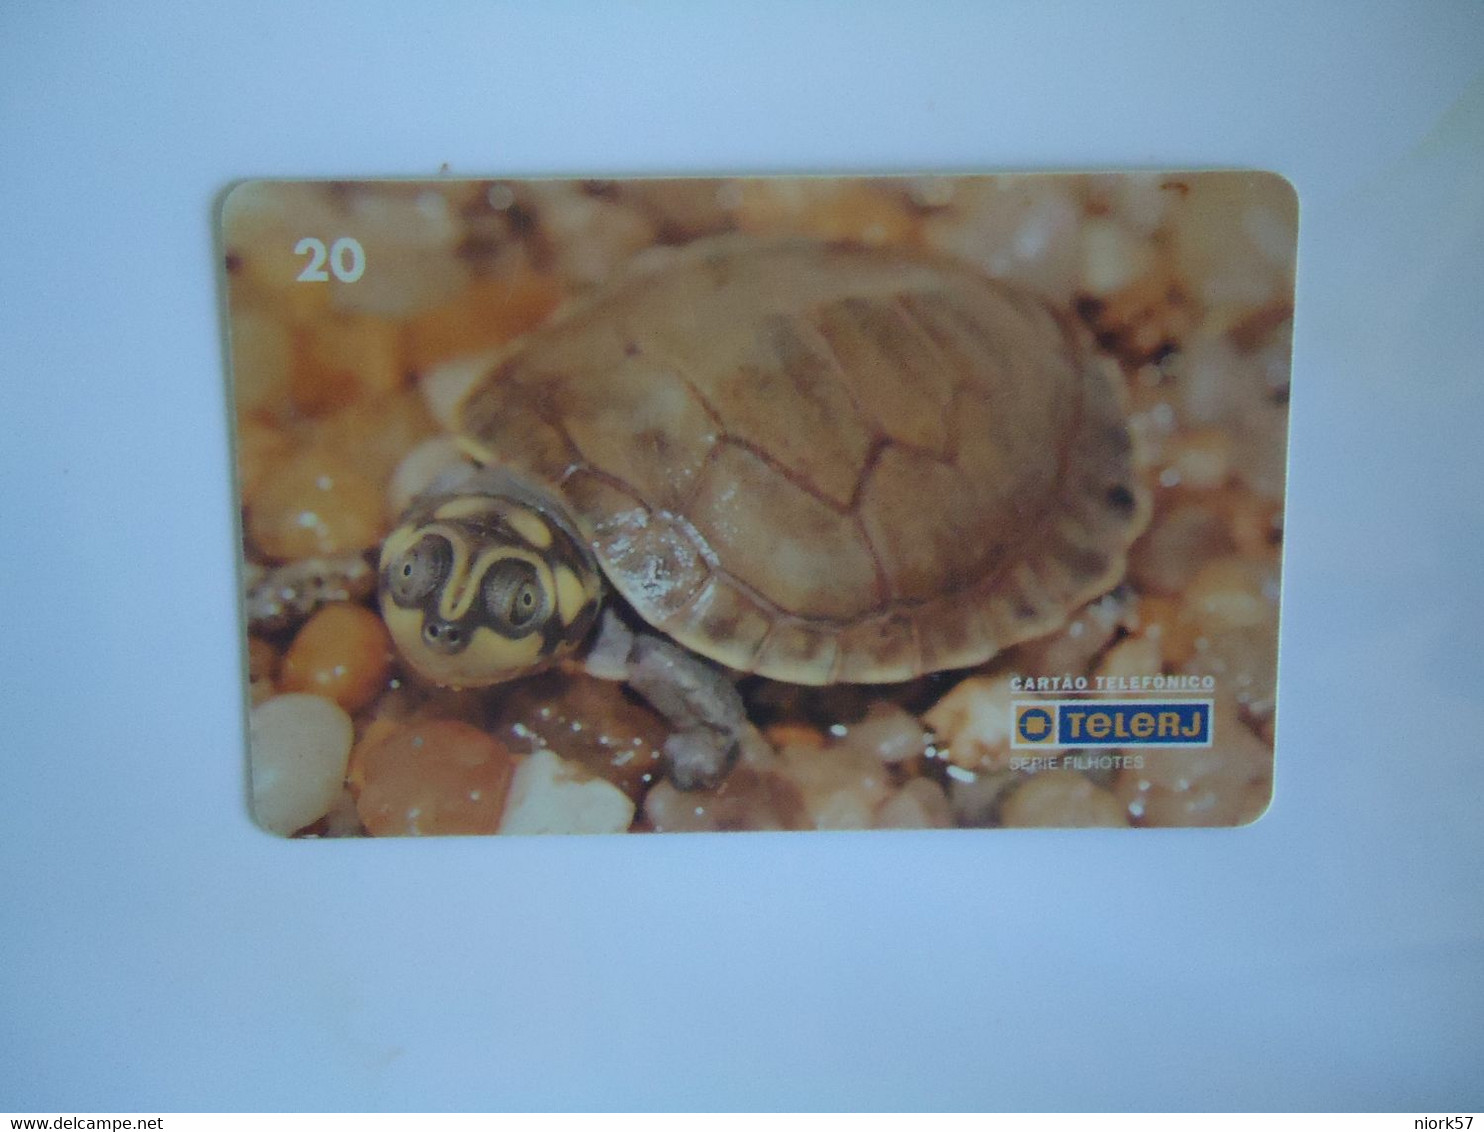 BRAZIL USED CARDS ANIMALS TURTLES - Schildpadden